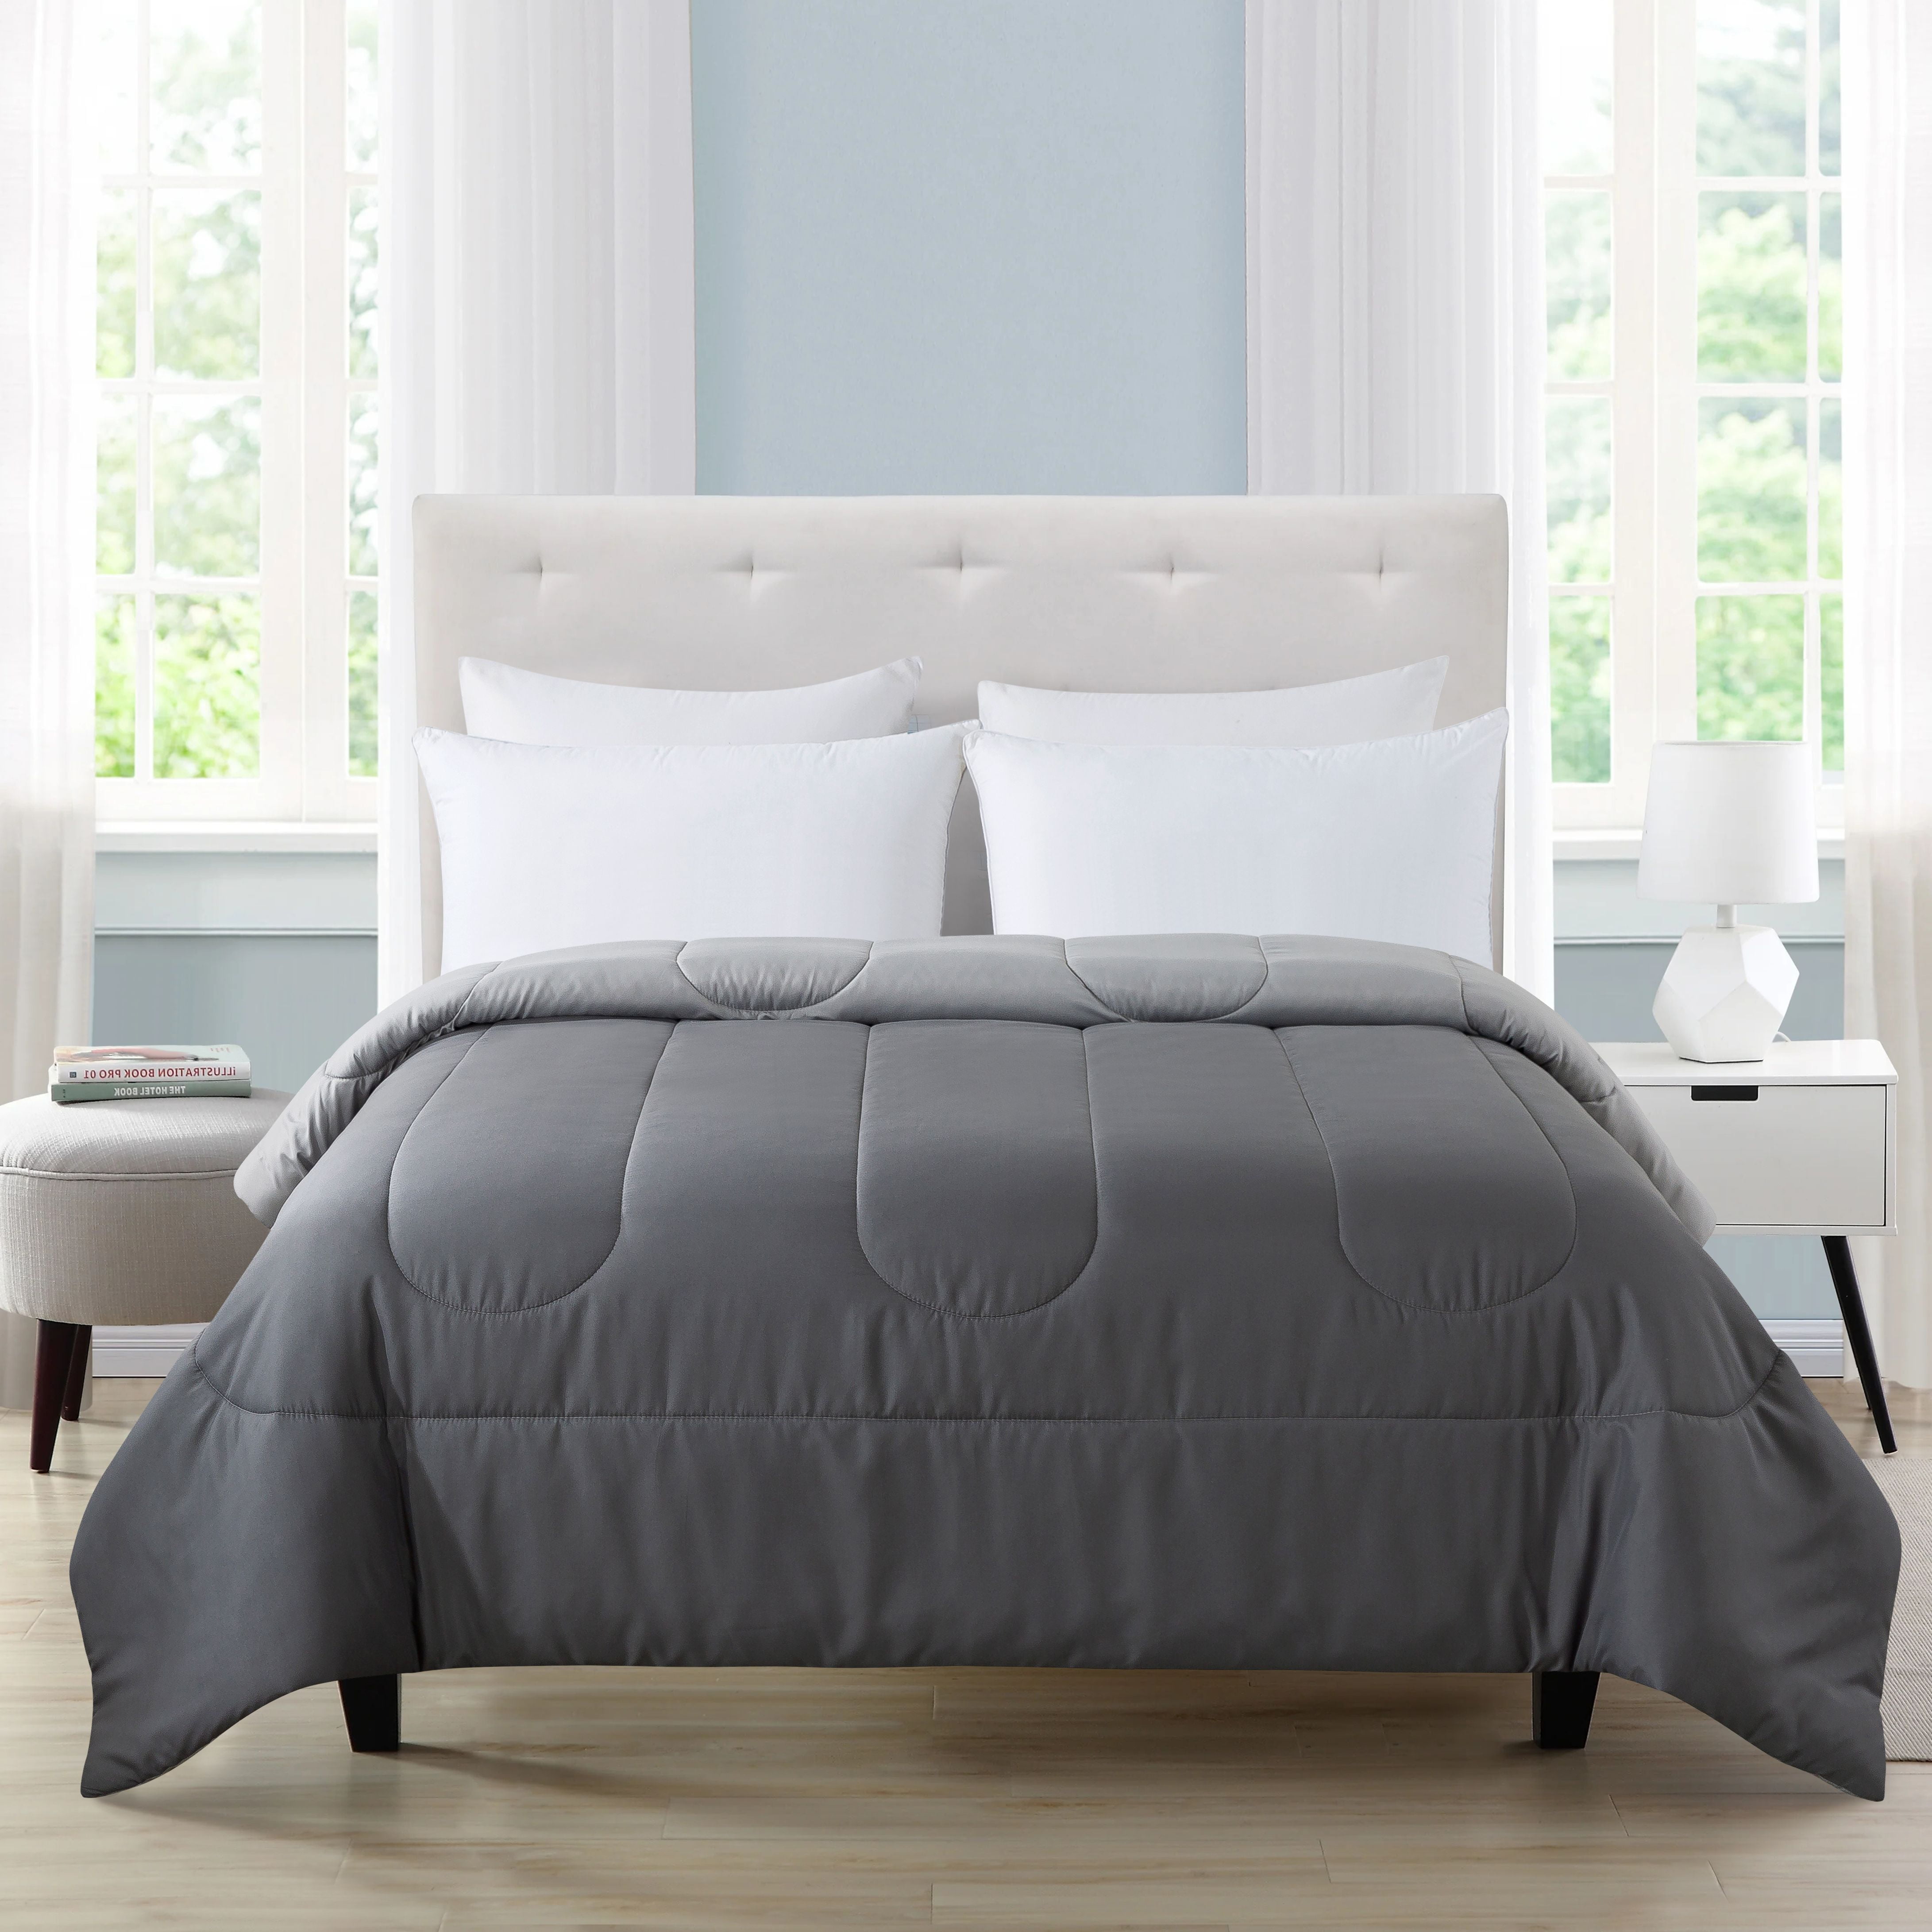 Mainstays Reversible Microfiber Comforter, Gray, Twin